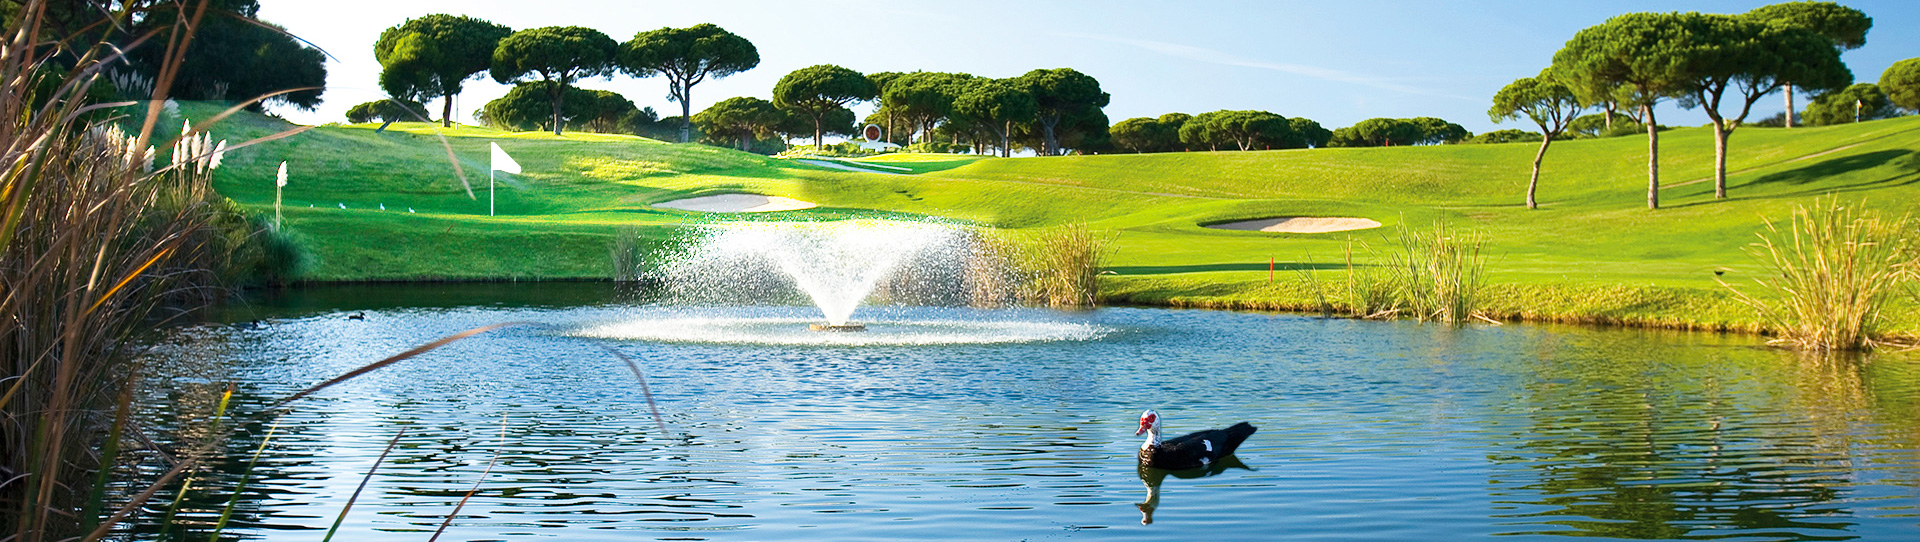 Portugal golf courses - Vale do Lobo Royal - Photo 3